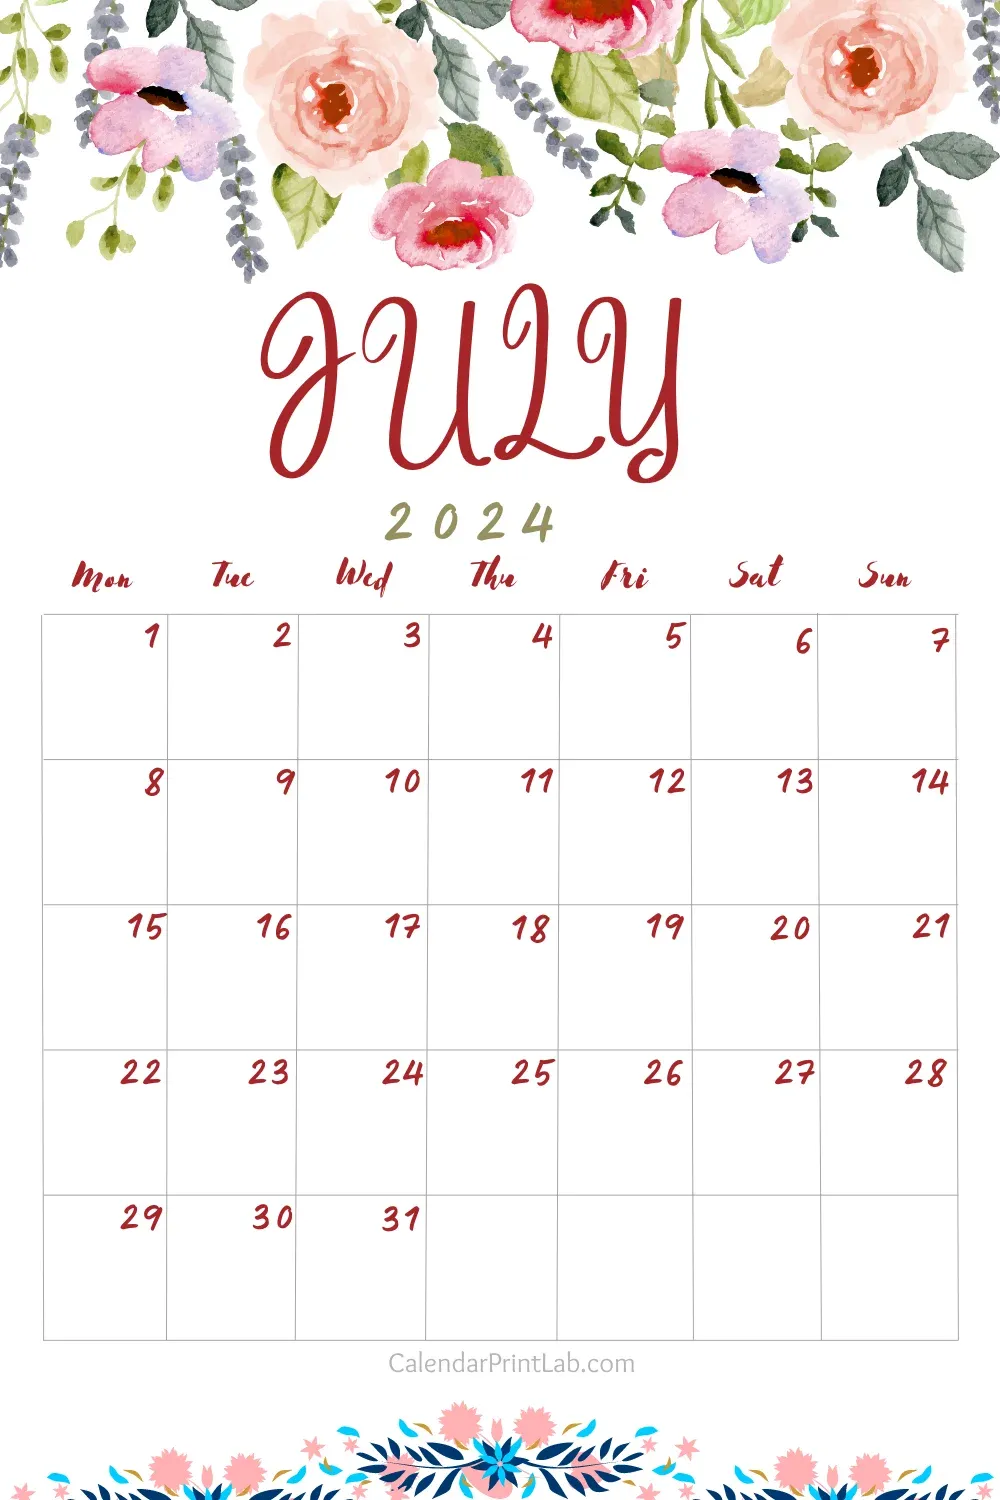 Download July 2024 Flower Calendar